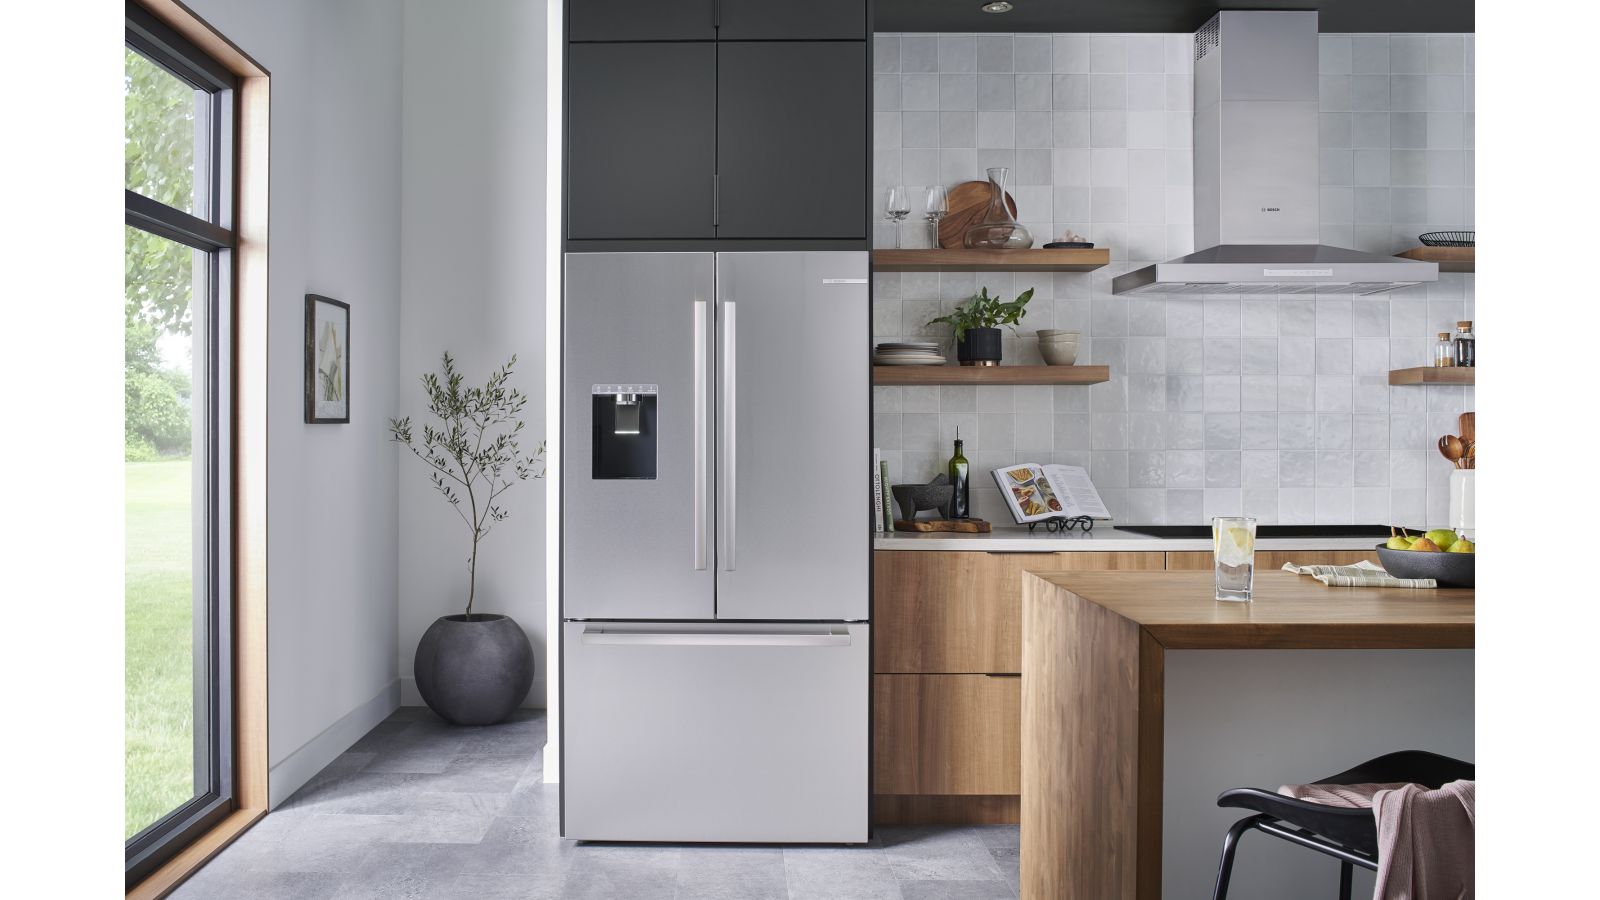 Bosch 500 Series standard-depth refrigerator with QuickIcePro System™